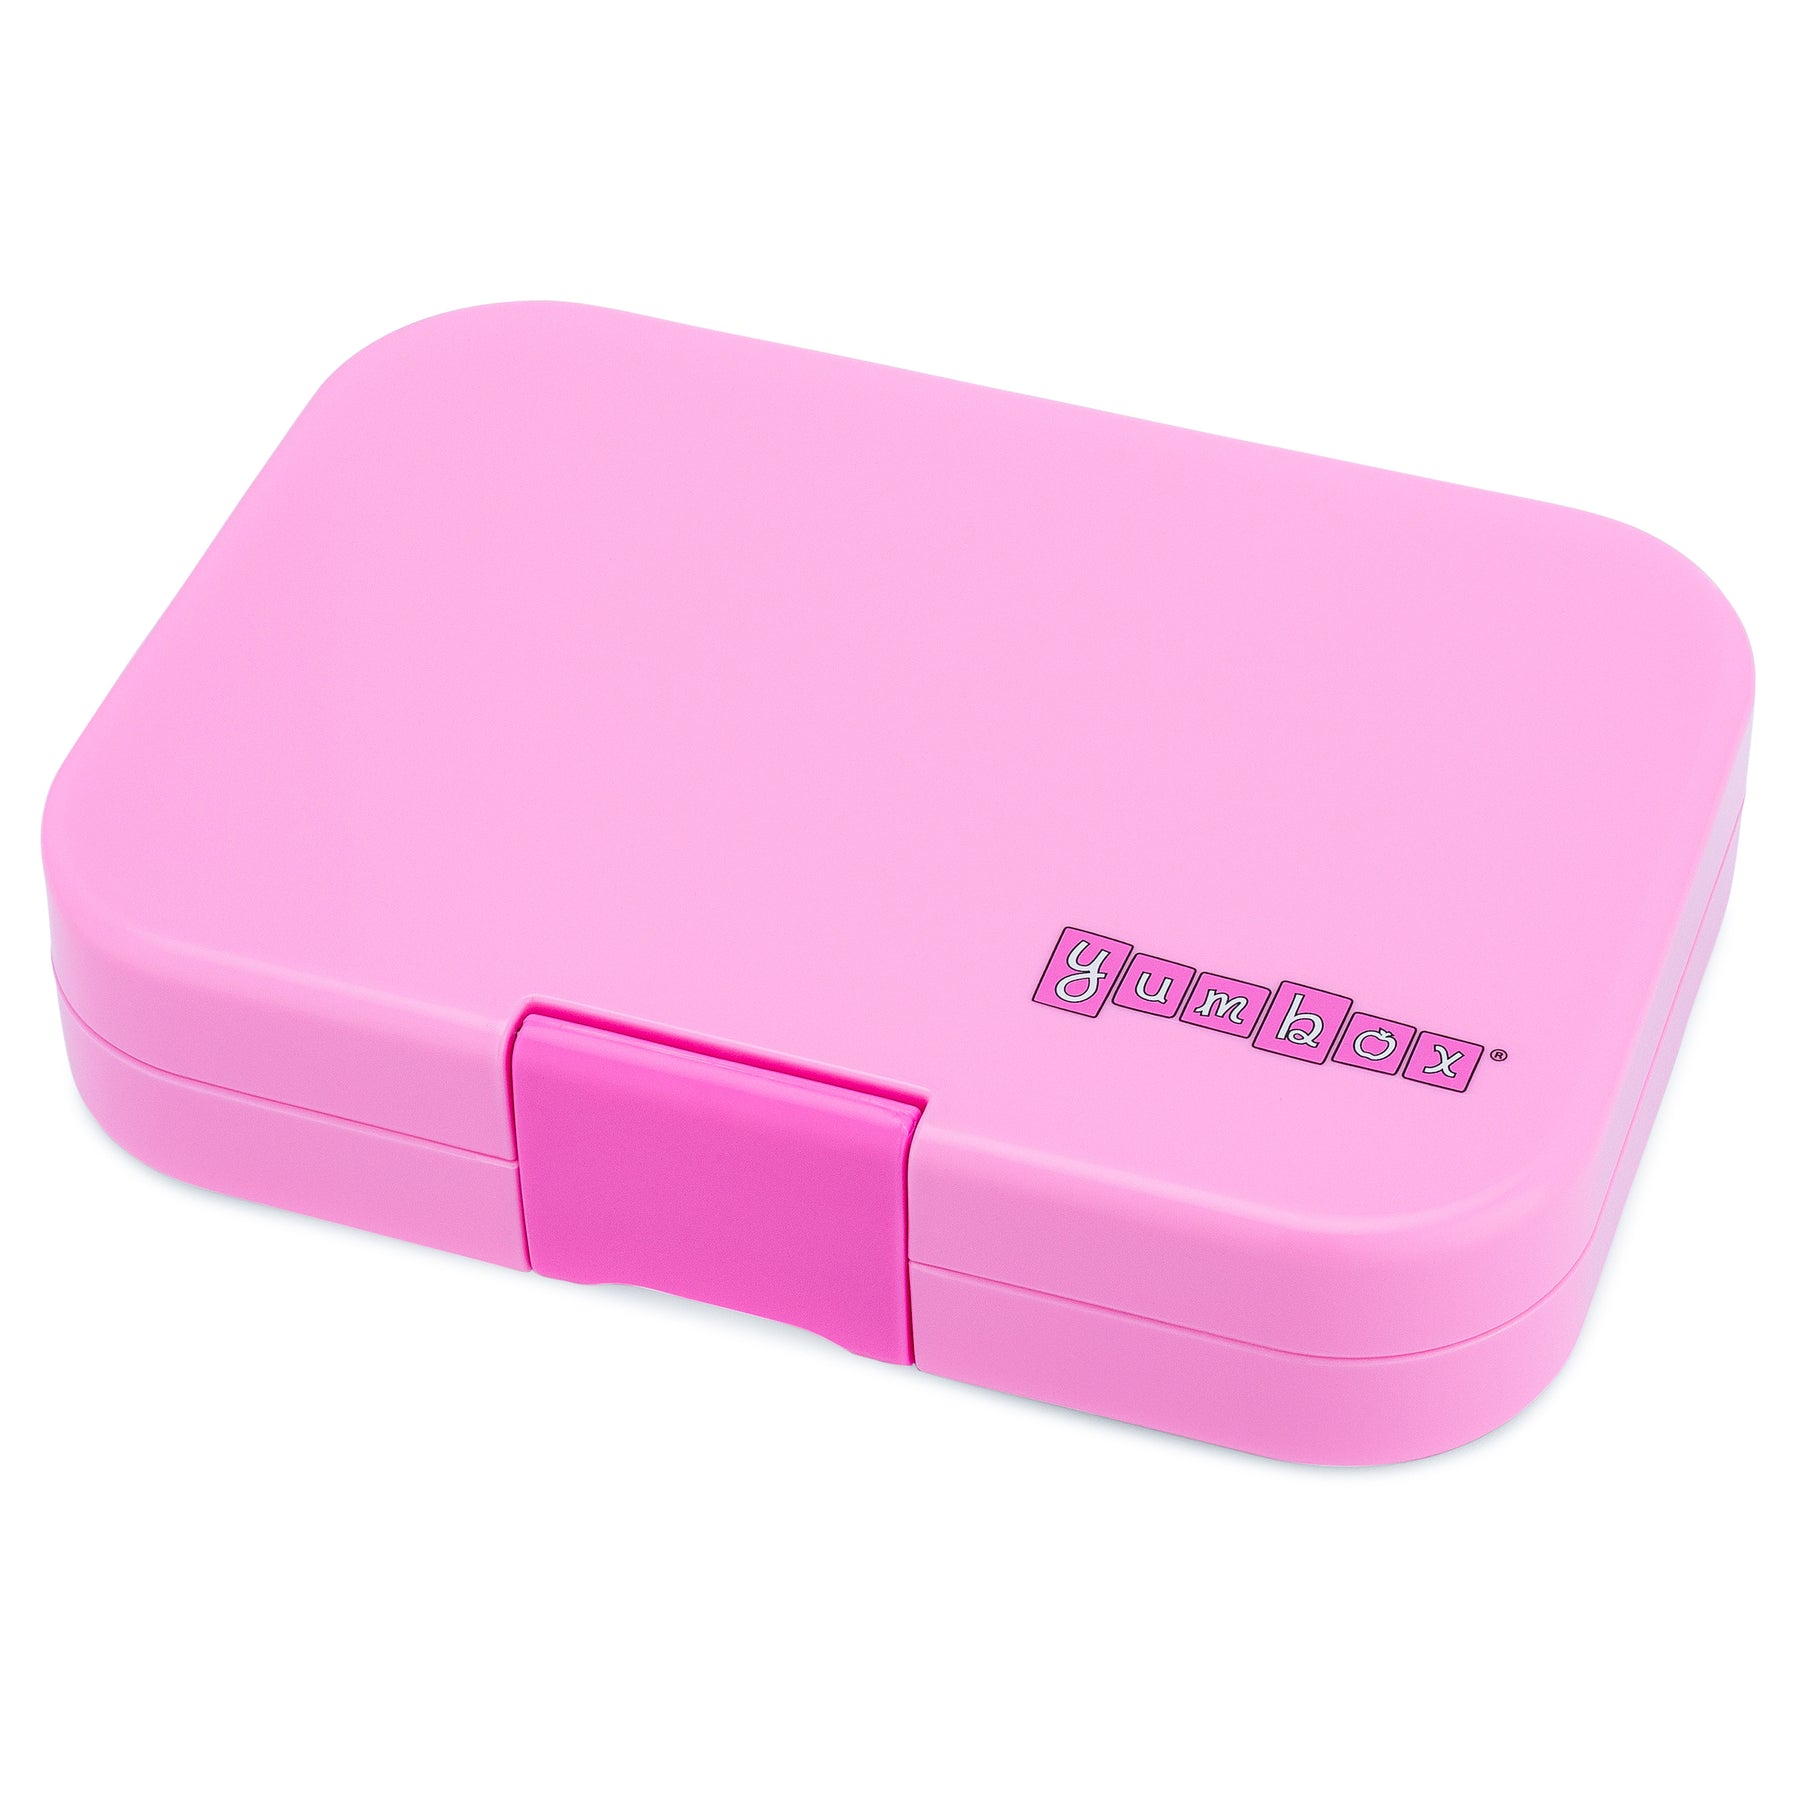 Yumbox Original Bento Lunchbox (6 Compartment) - Fifi Pink